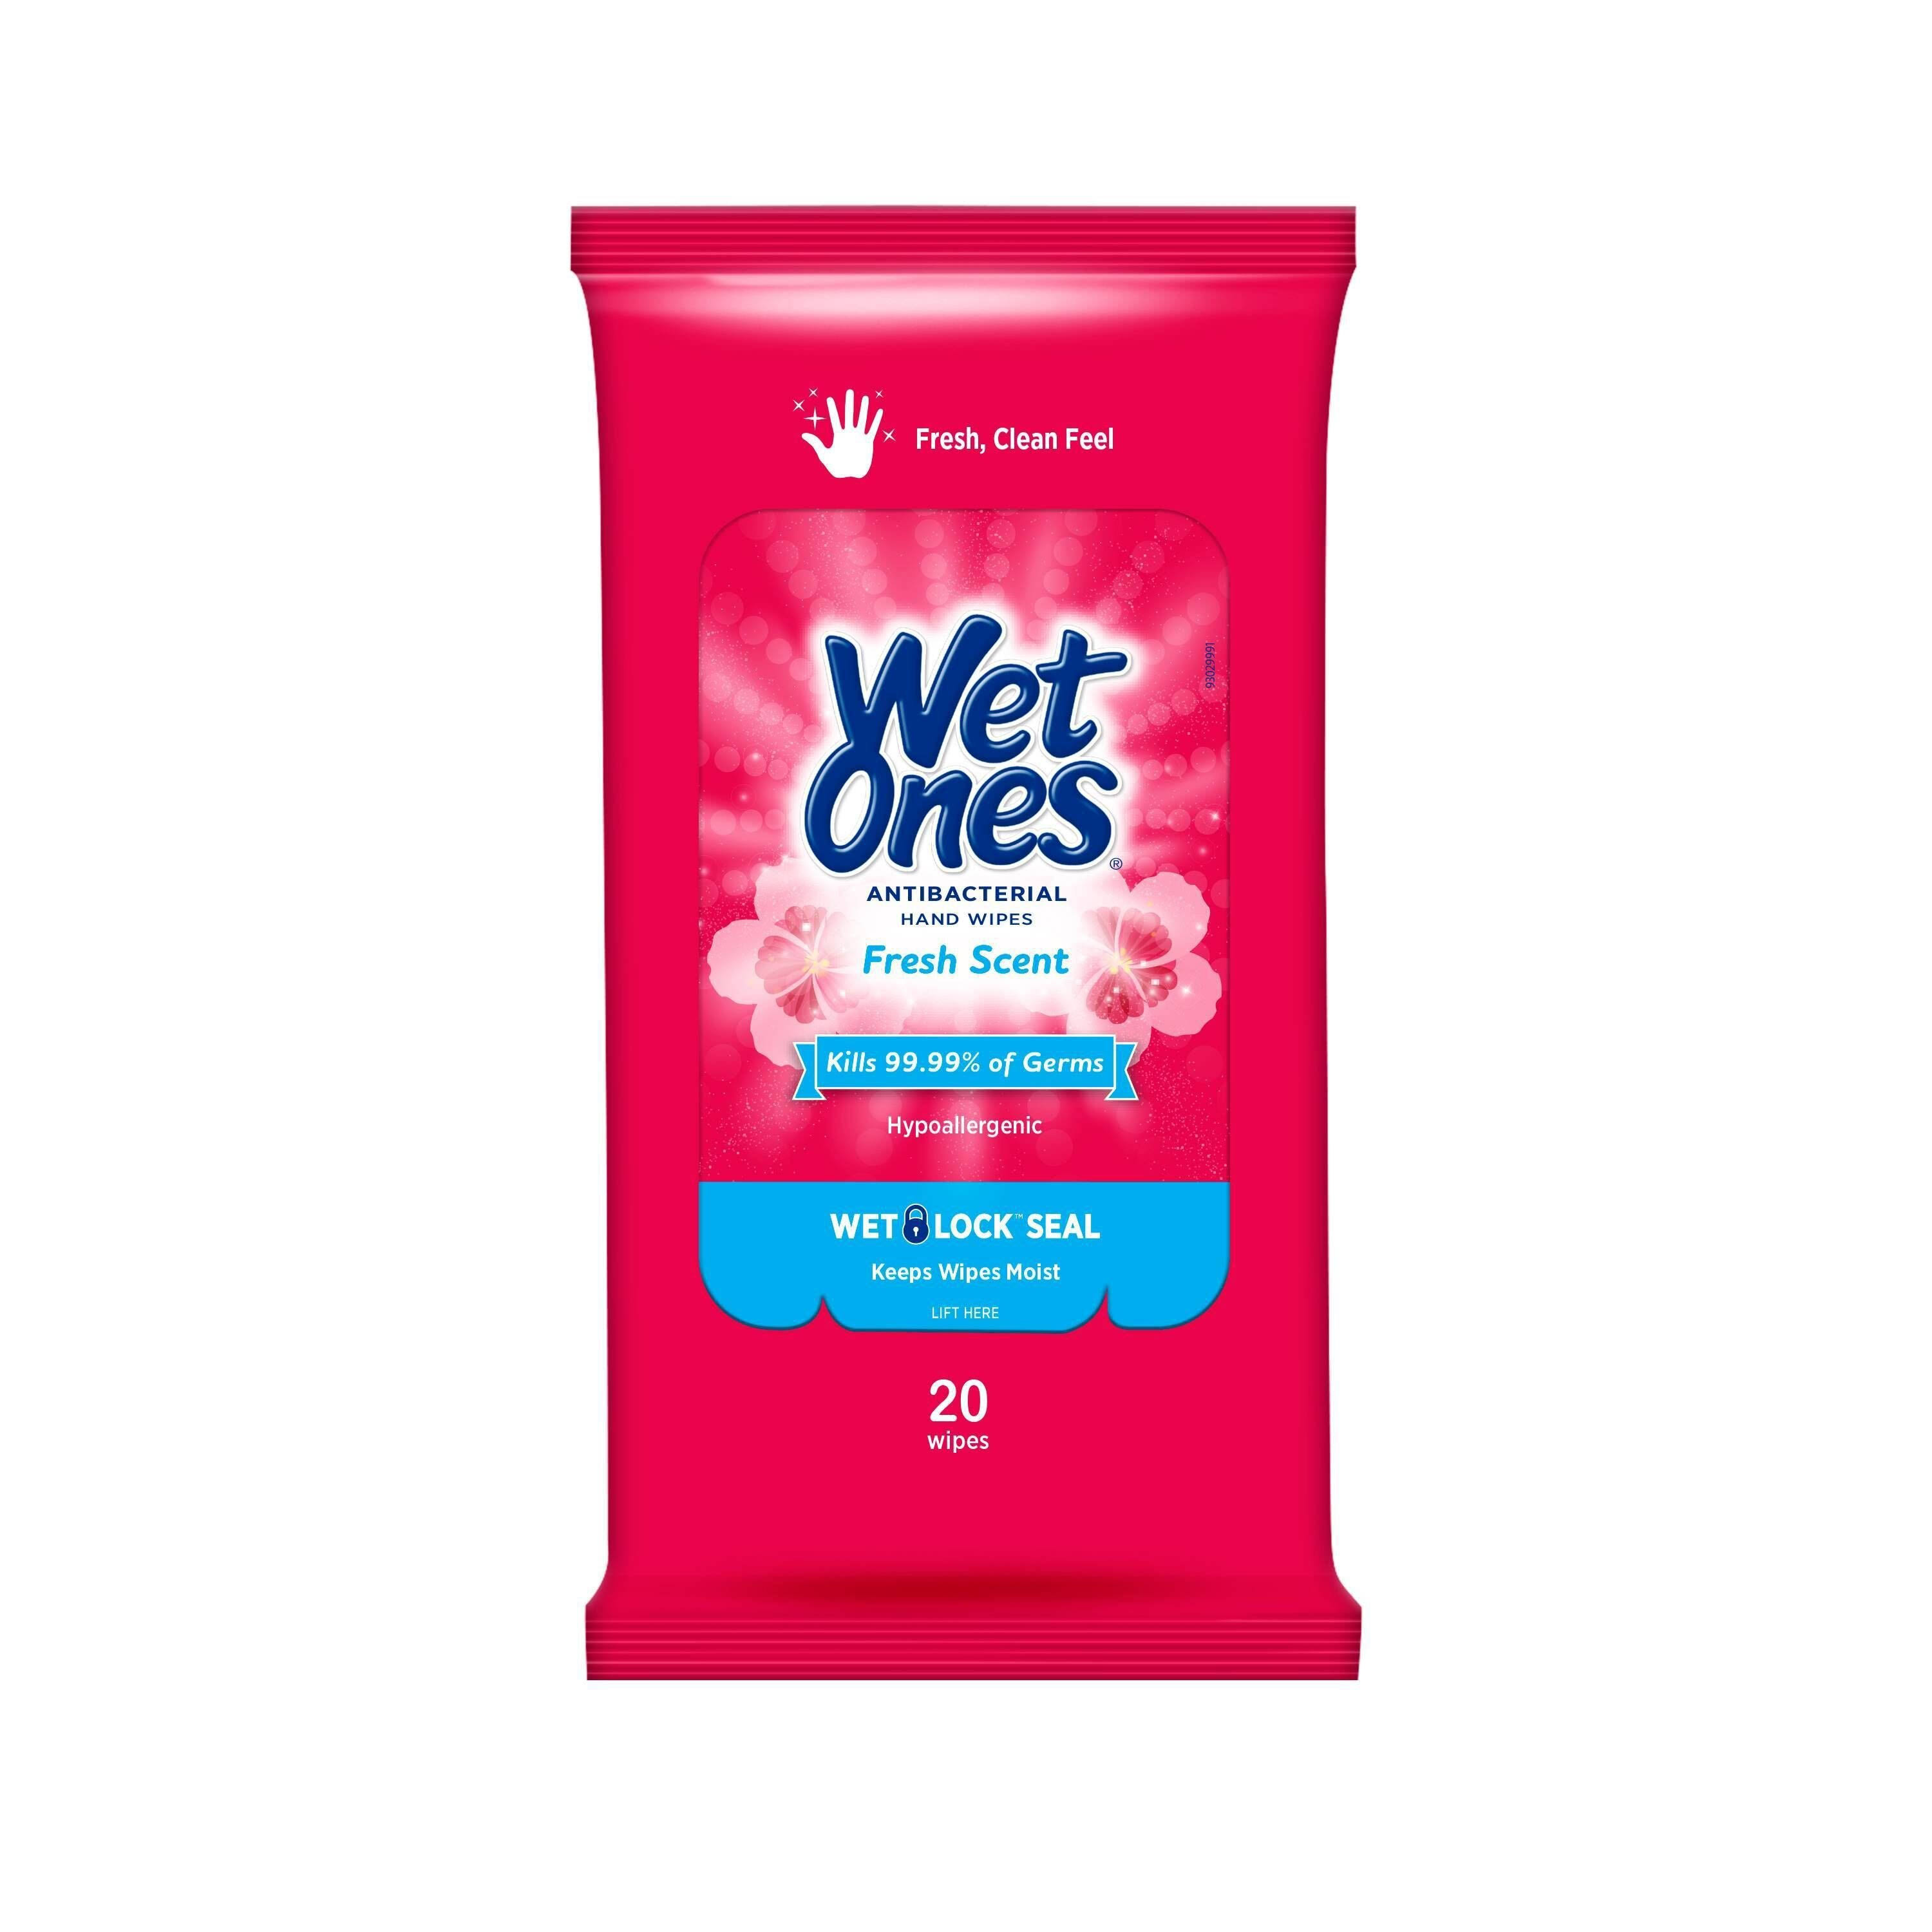 Wet Ones Antibacterial Hand Wipes - 20 Wipes, Fresh Scent